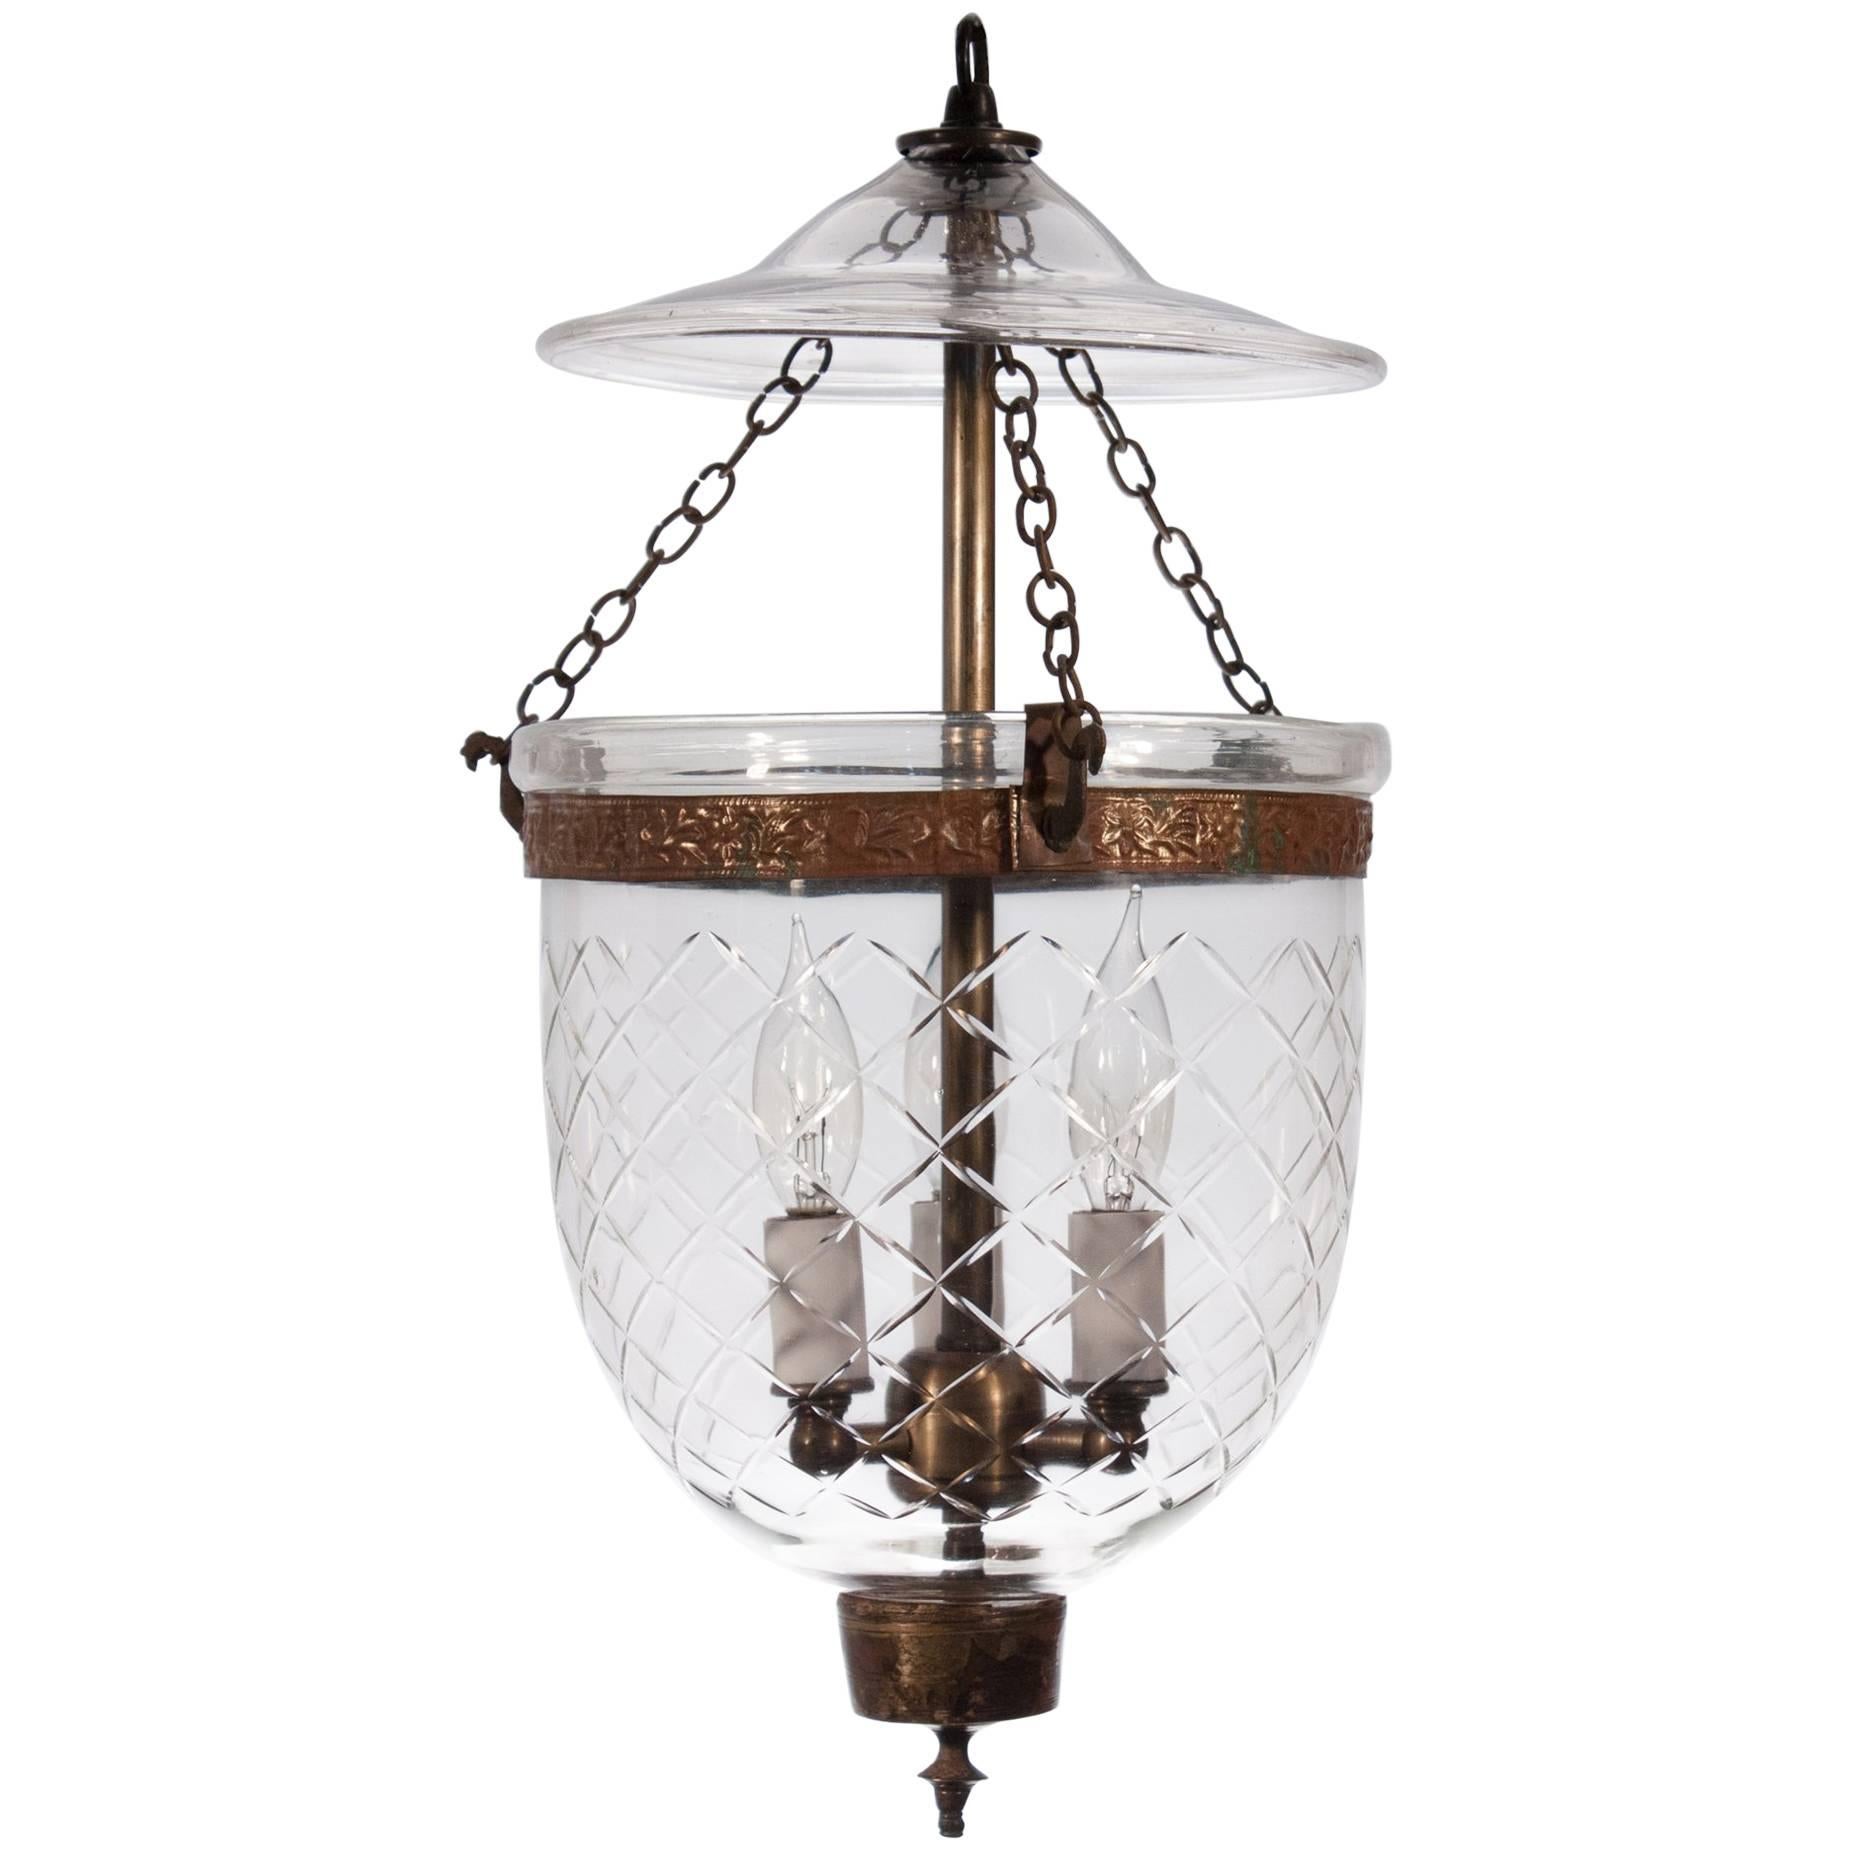 Petite English Bell Jar Lantern with Diamond Motif